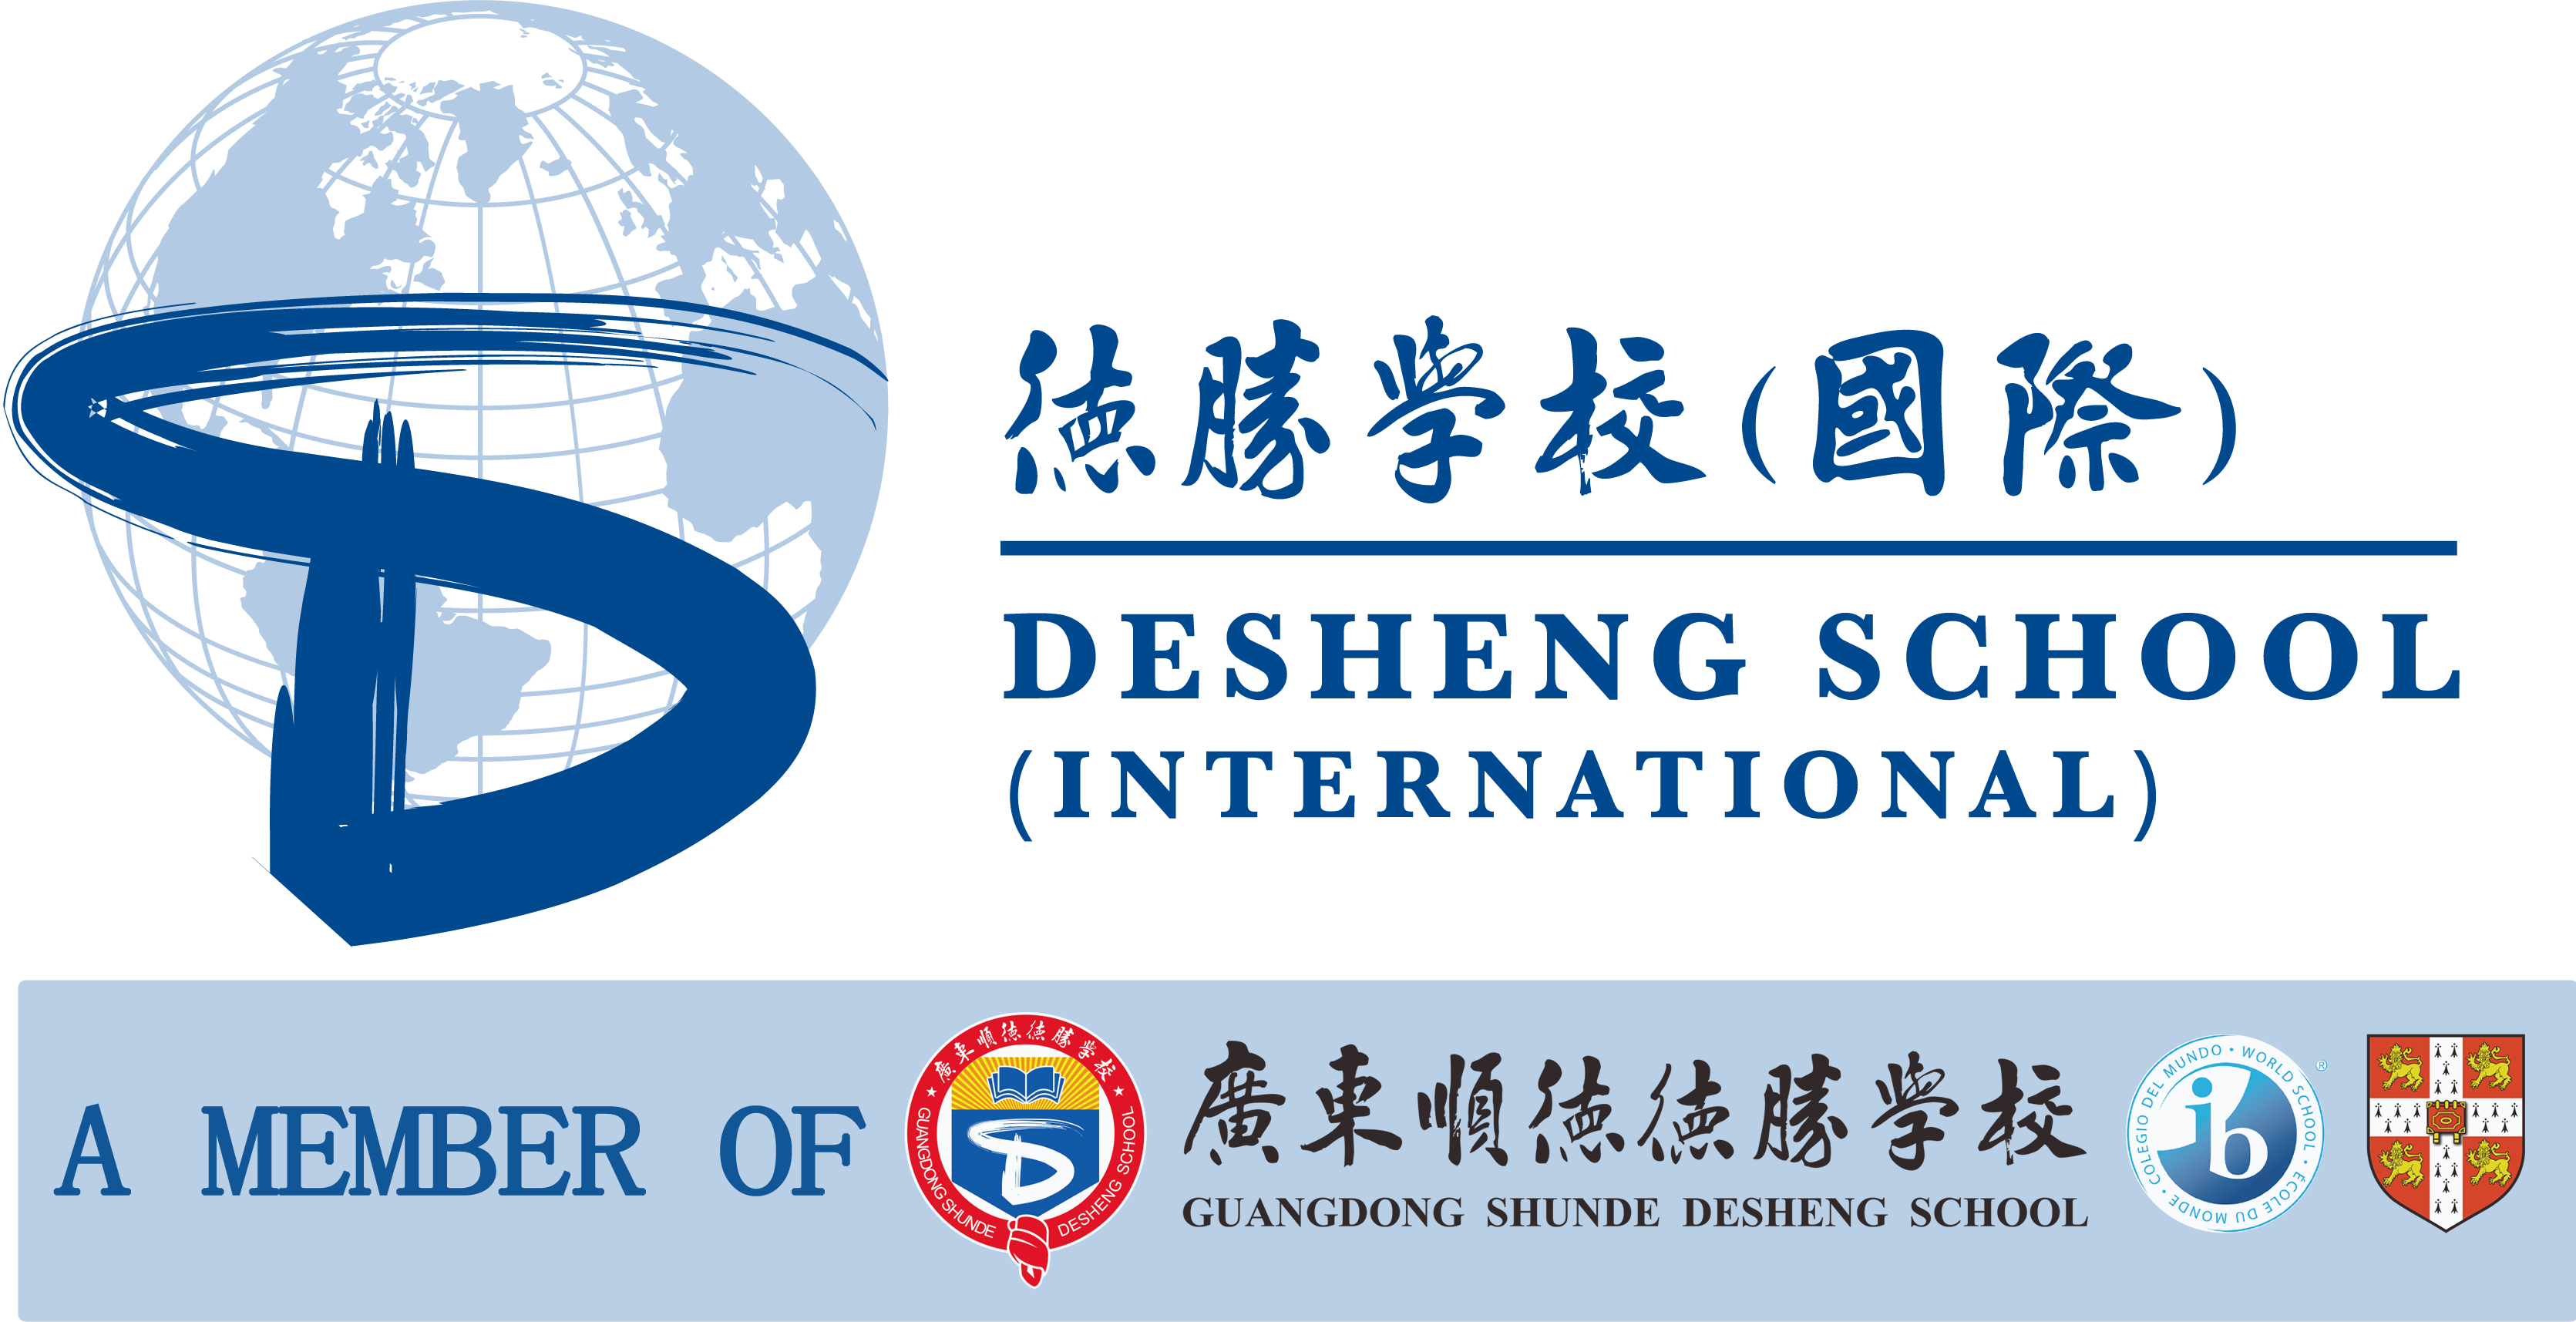 Desheng School (International) 广东顺德德胜学校（国际）